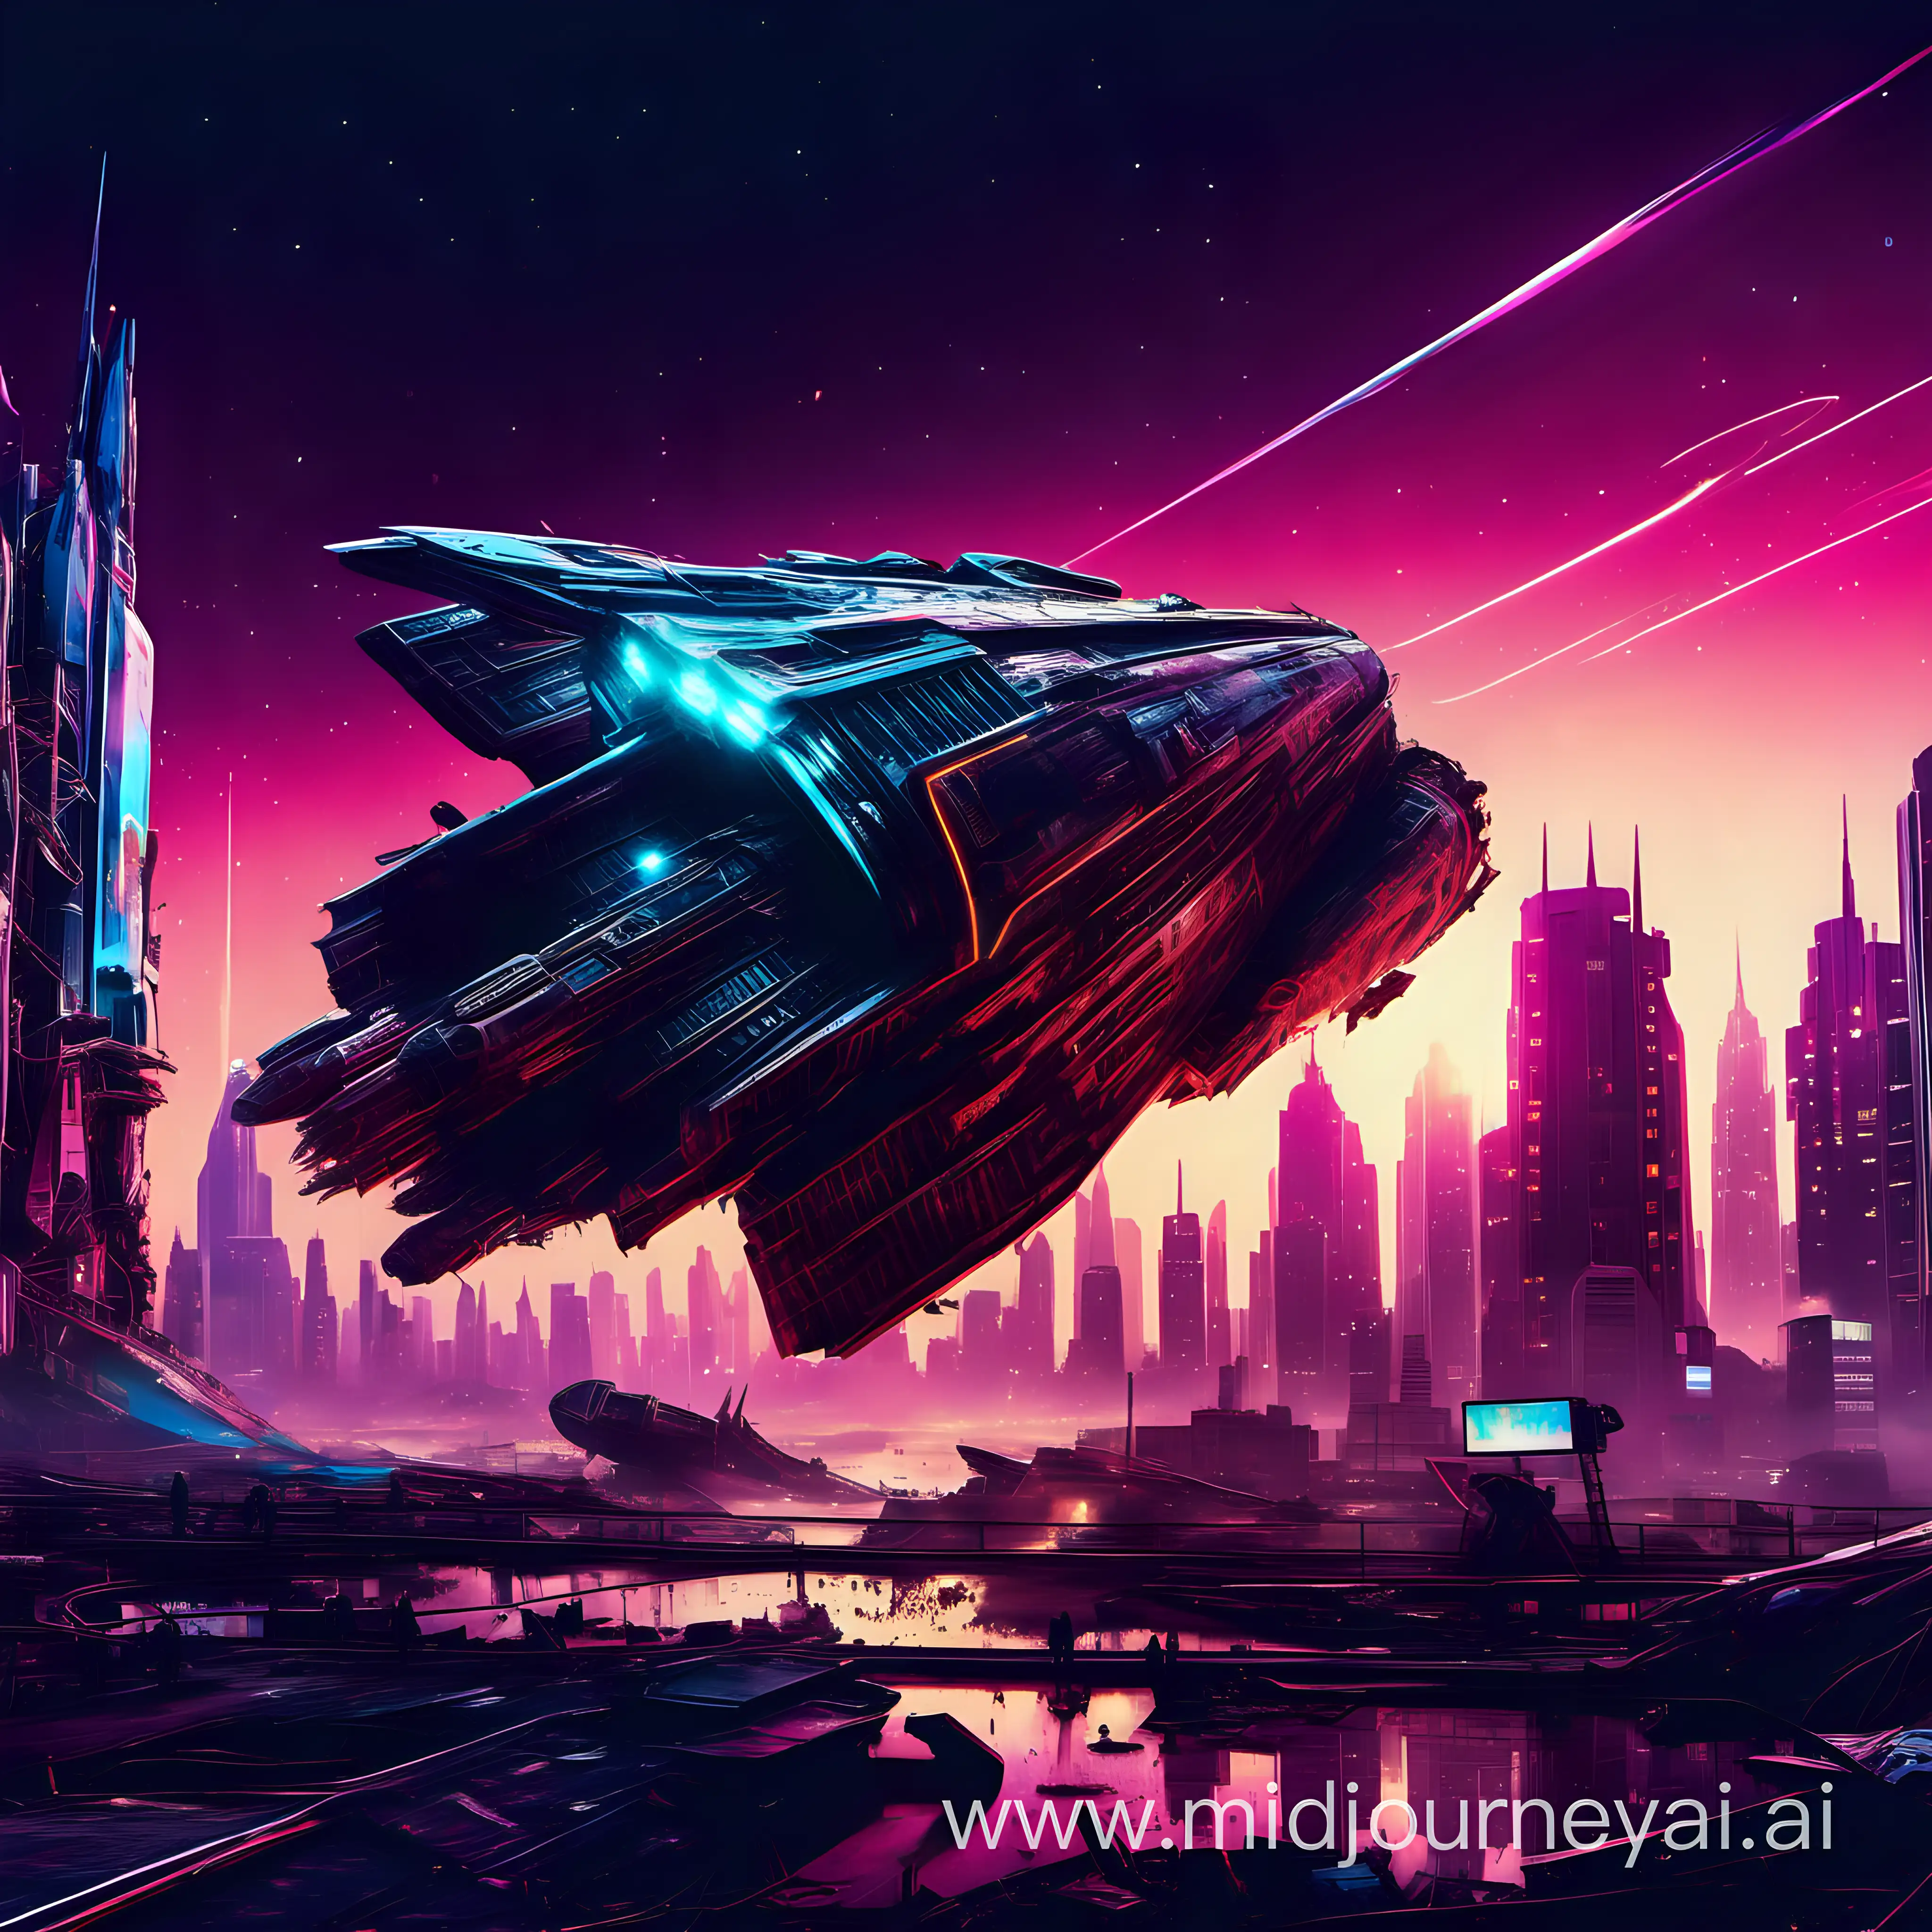 Crashed Spaceship Amidst Futuristic Neon City